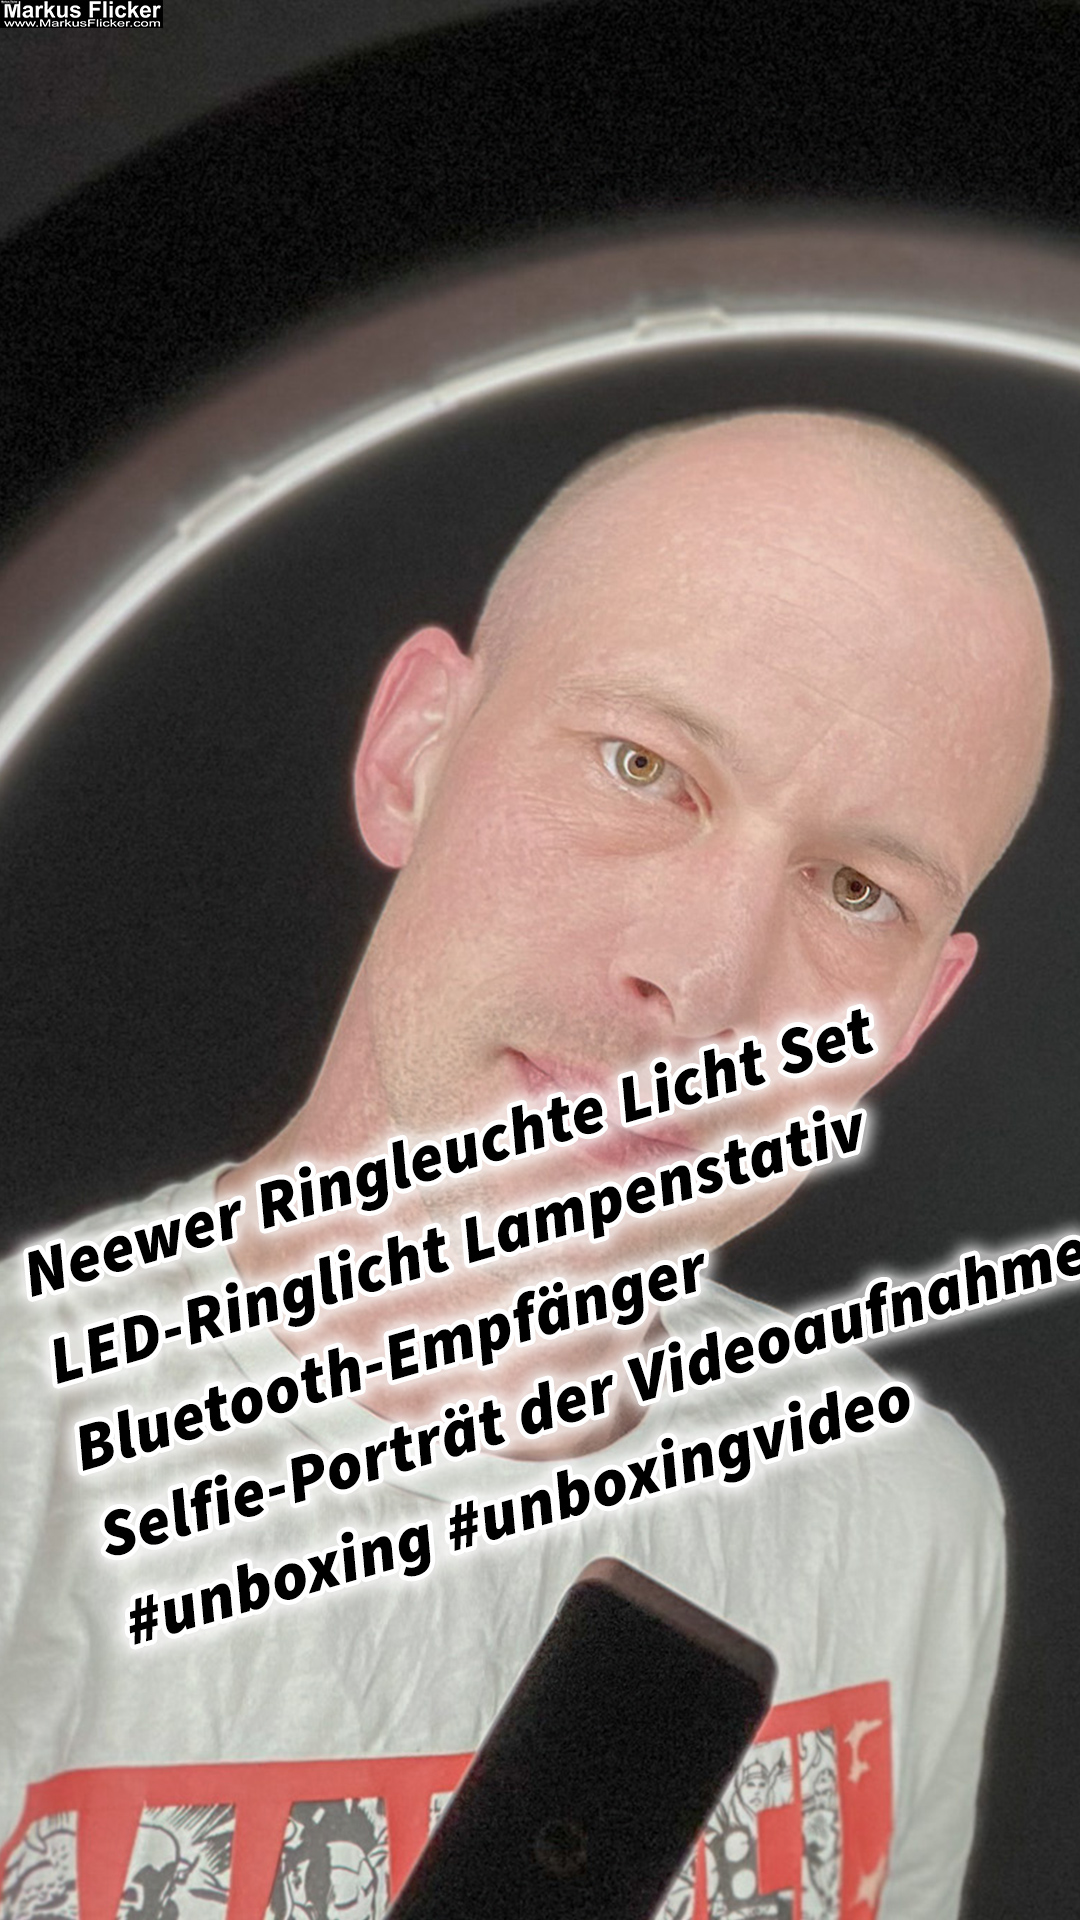 Neewer Ringleuchte Licht Set LED-Ringlicht Lampenstativ Bluetooth-Empfänger Selfie-Porträt der Videoaufnahme #unboxing #unboxingvideo